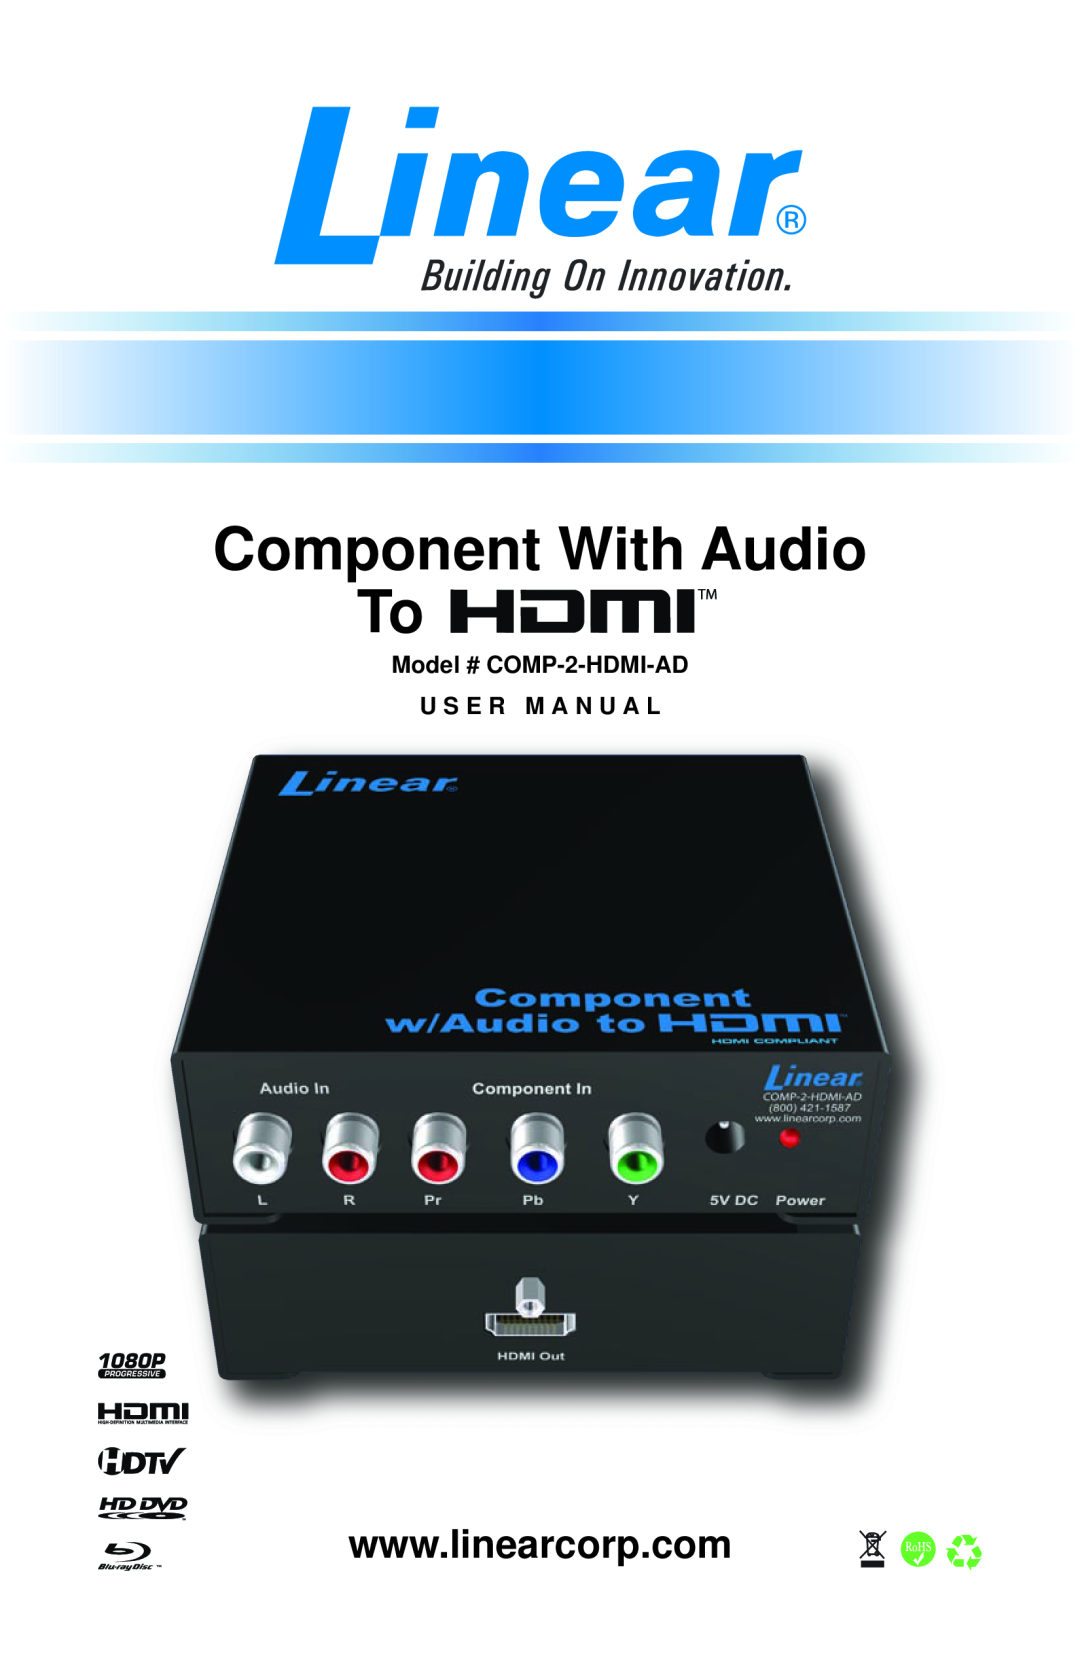 Linear user manual Model # COMP-2-HDMI-AD U S E R M A N U A L, Component With Audio To HDMI 